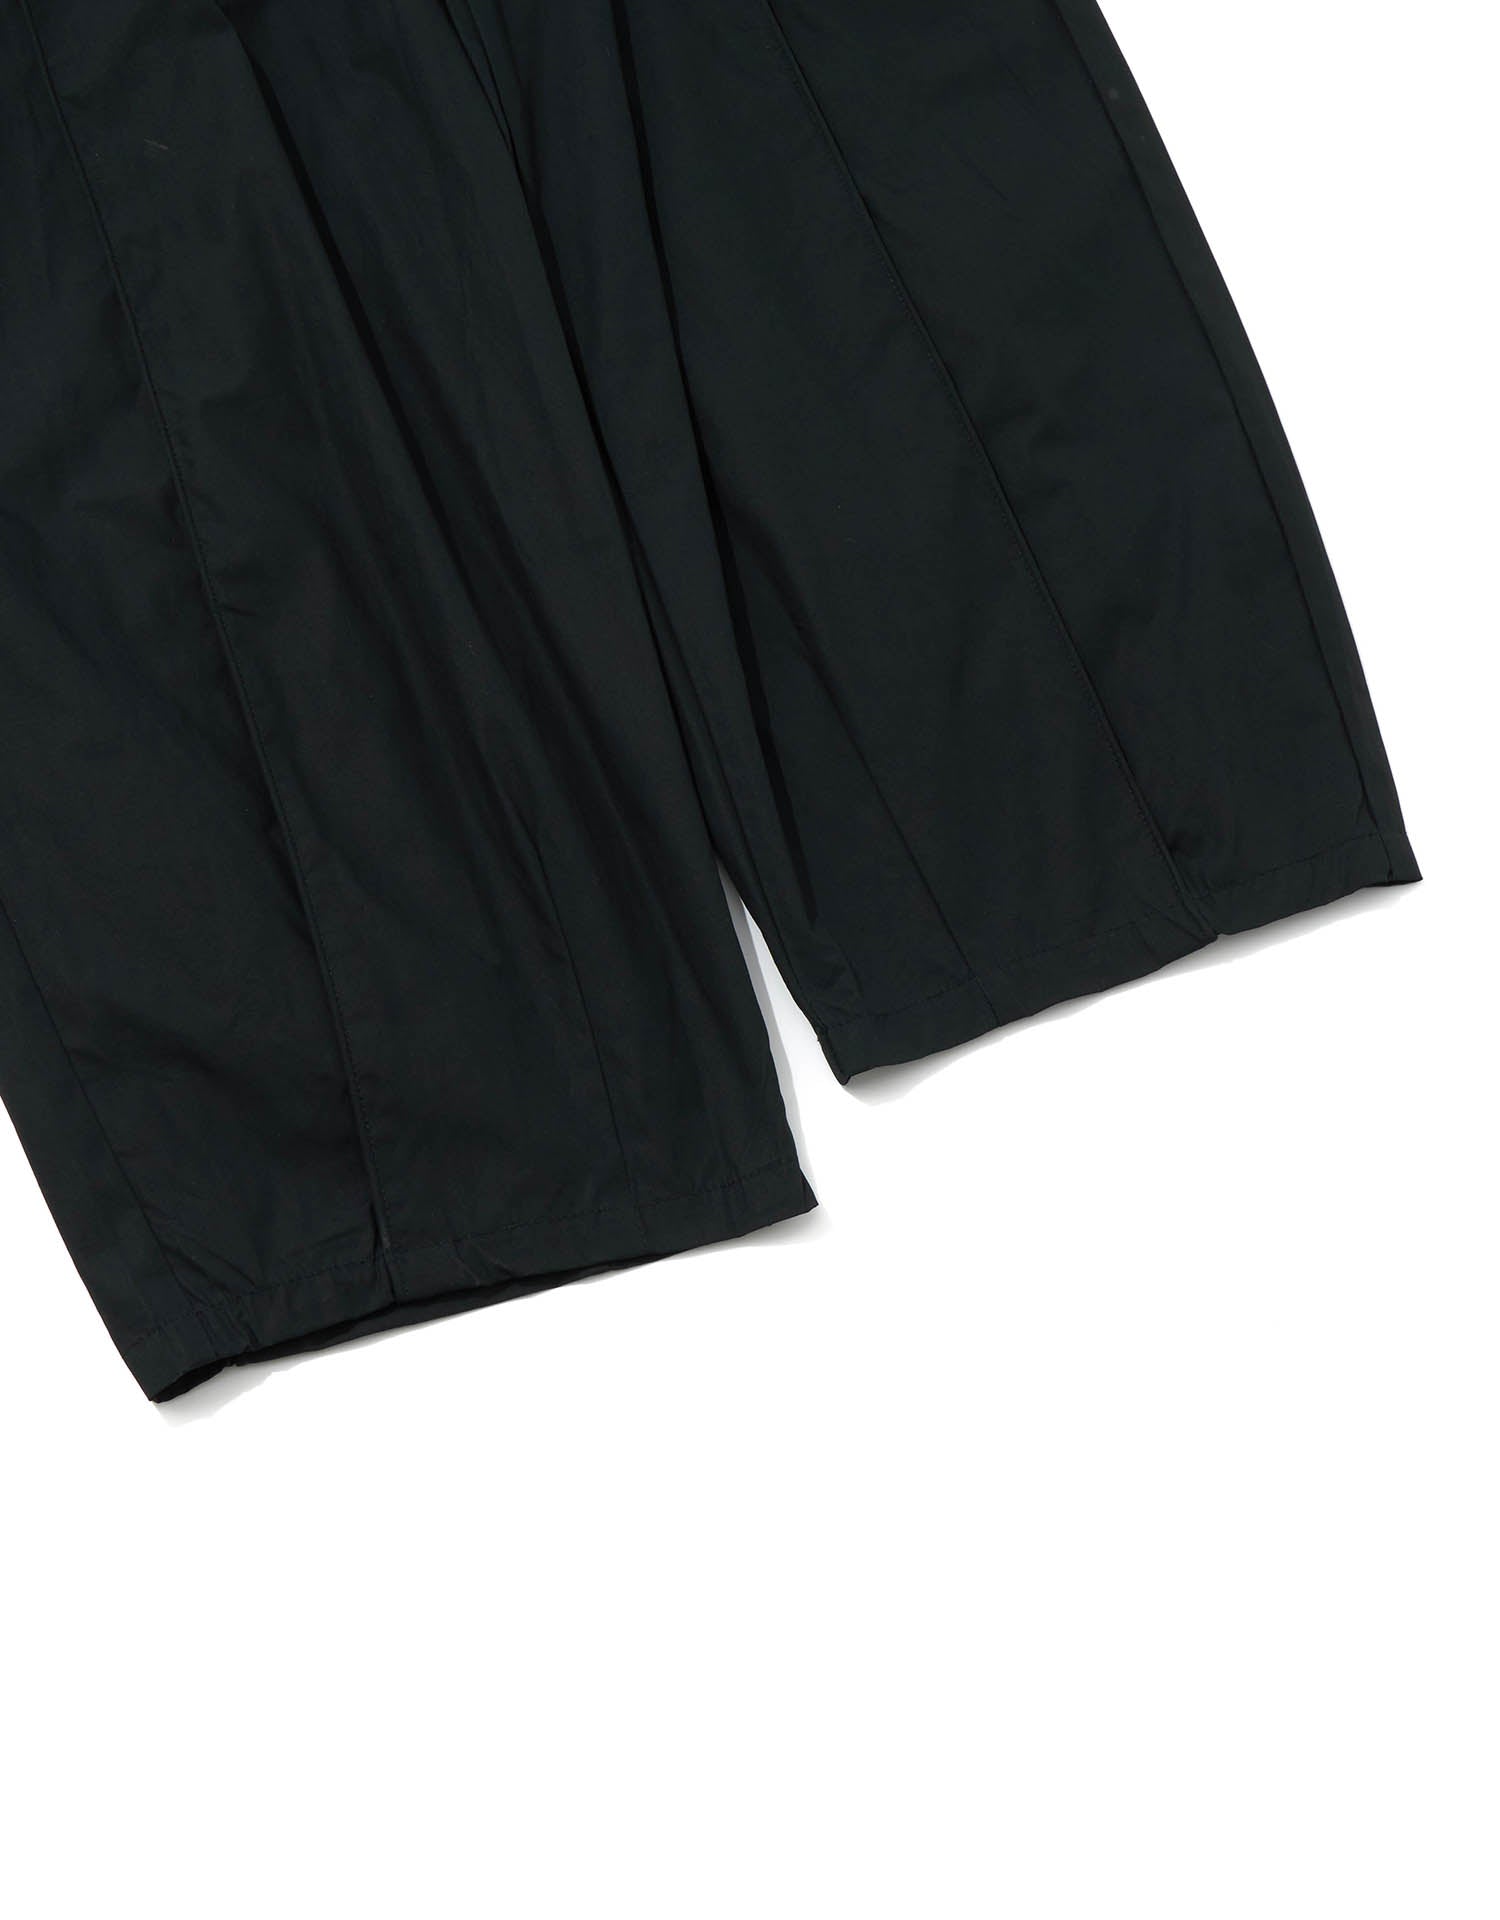 TopBasics Faked Pockets Binding Relaxed Pants